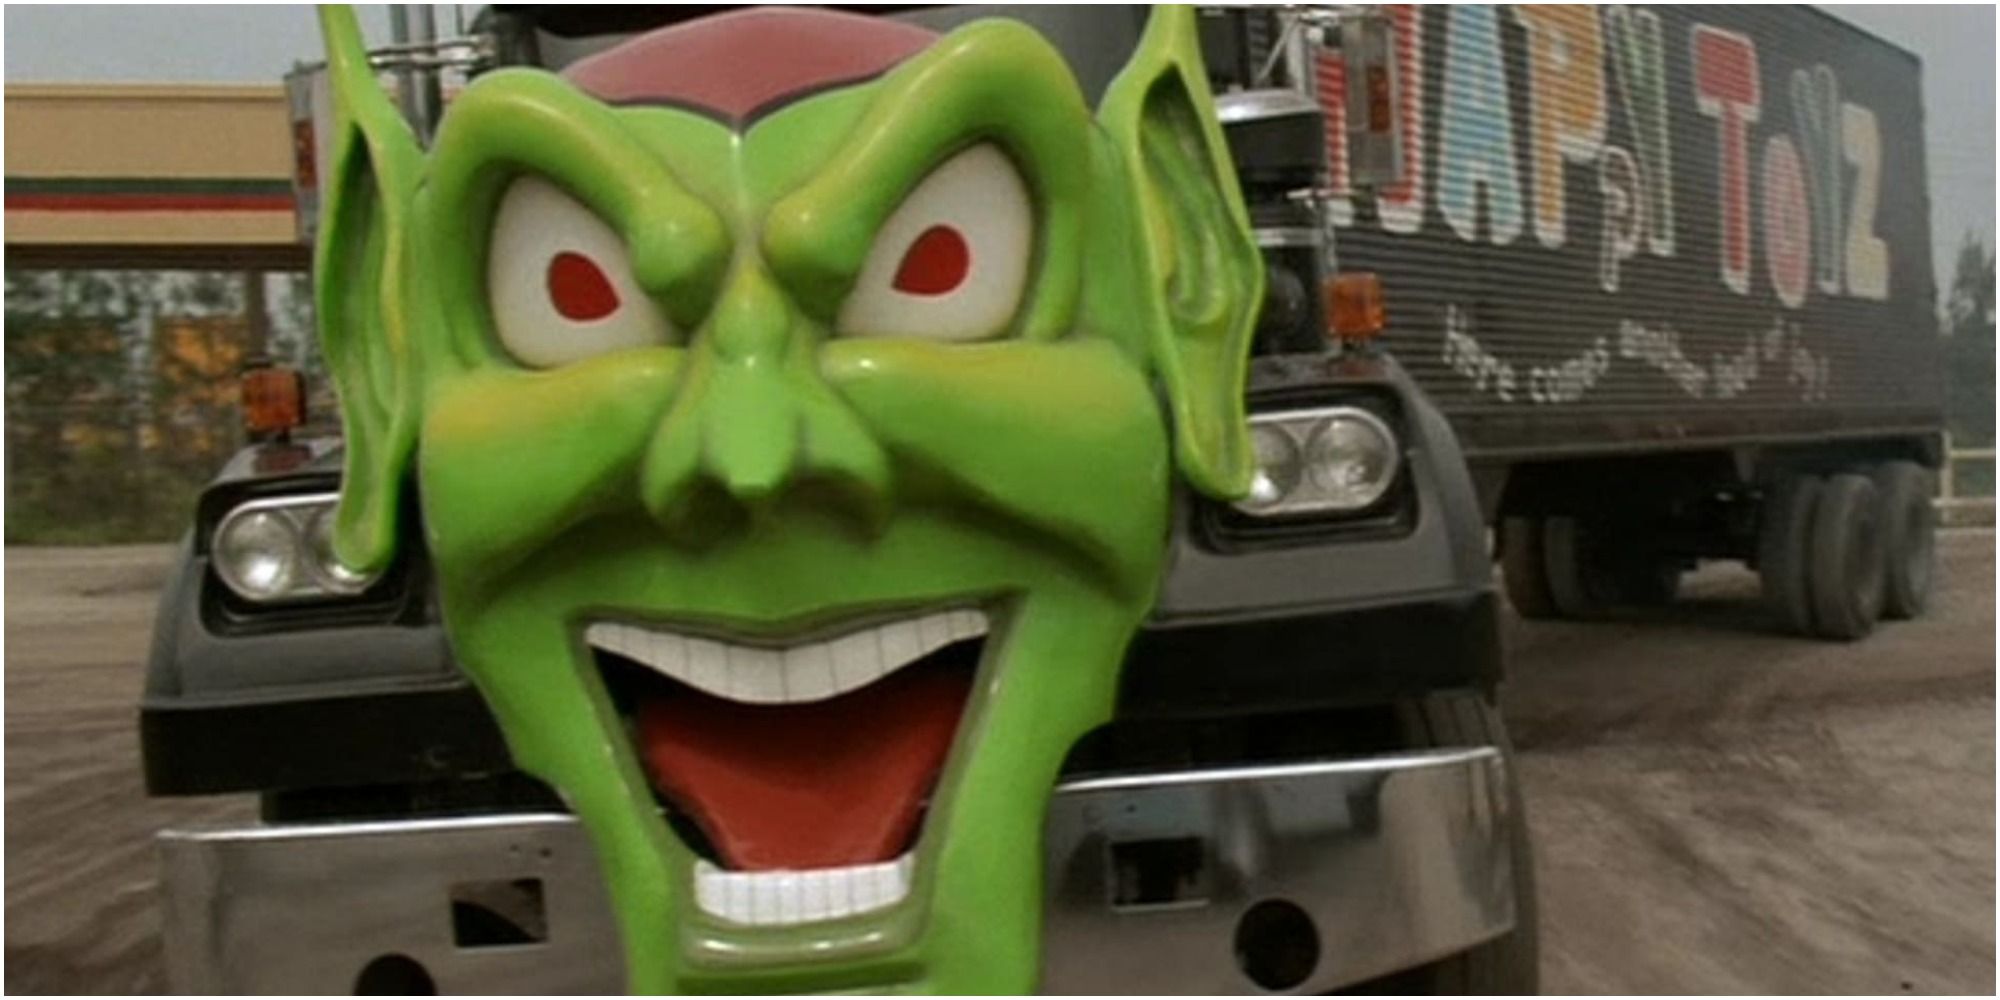 A truck with a goblin face